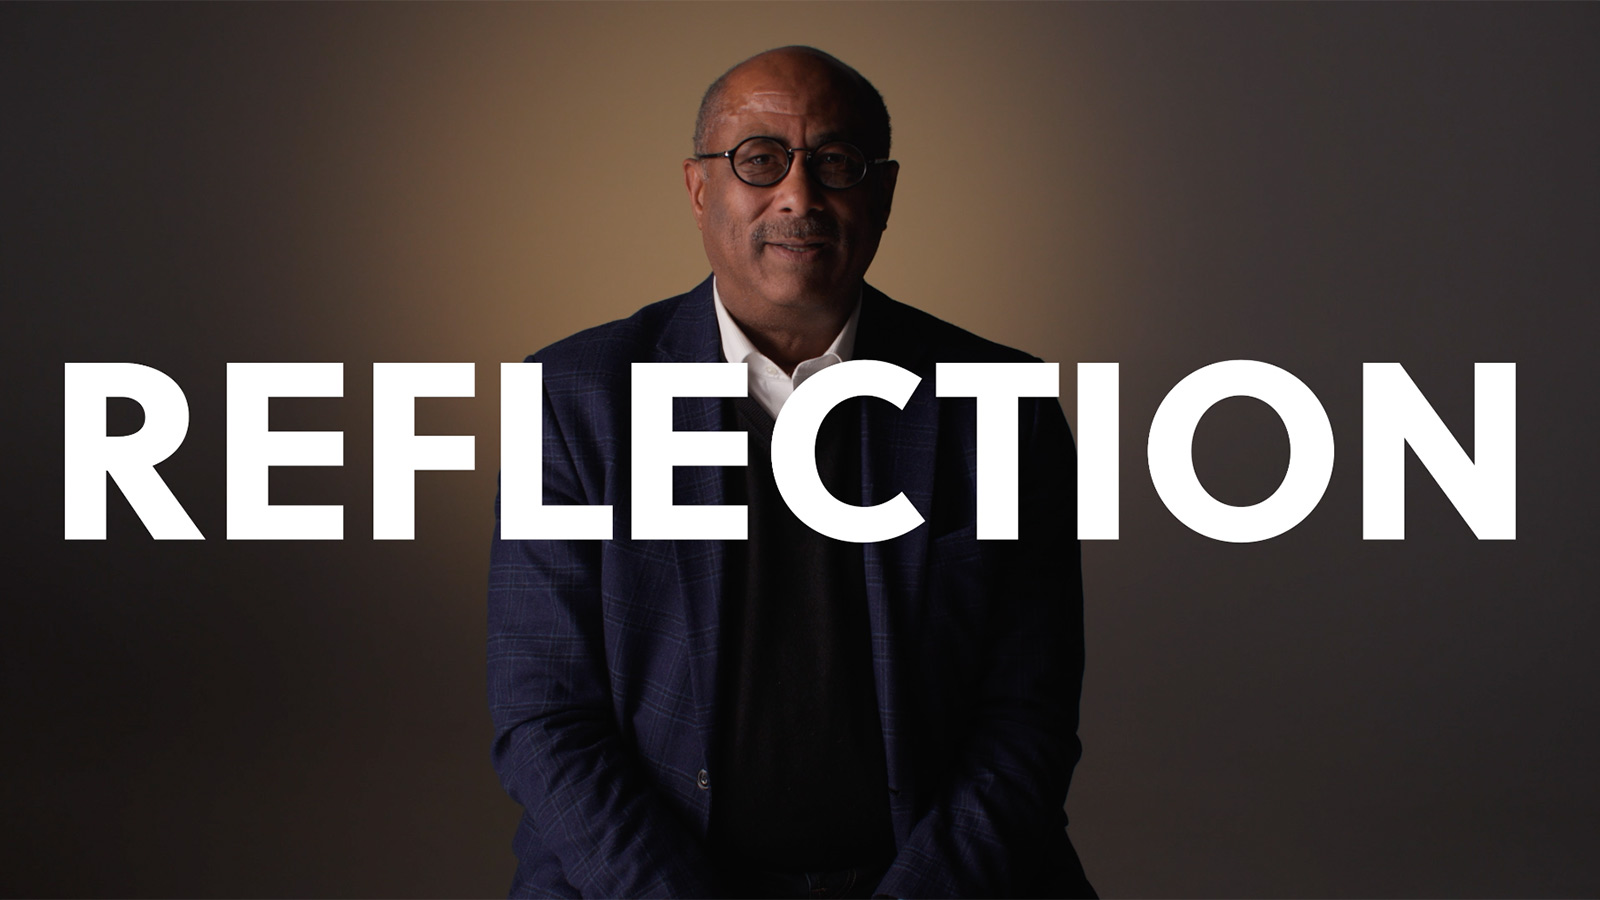 Kauffman Scholars, Inc. video: "Reflection"